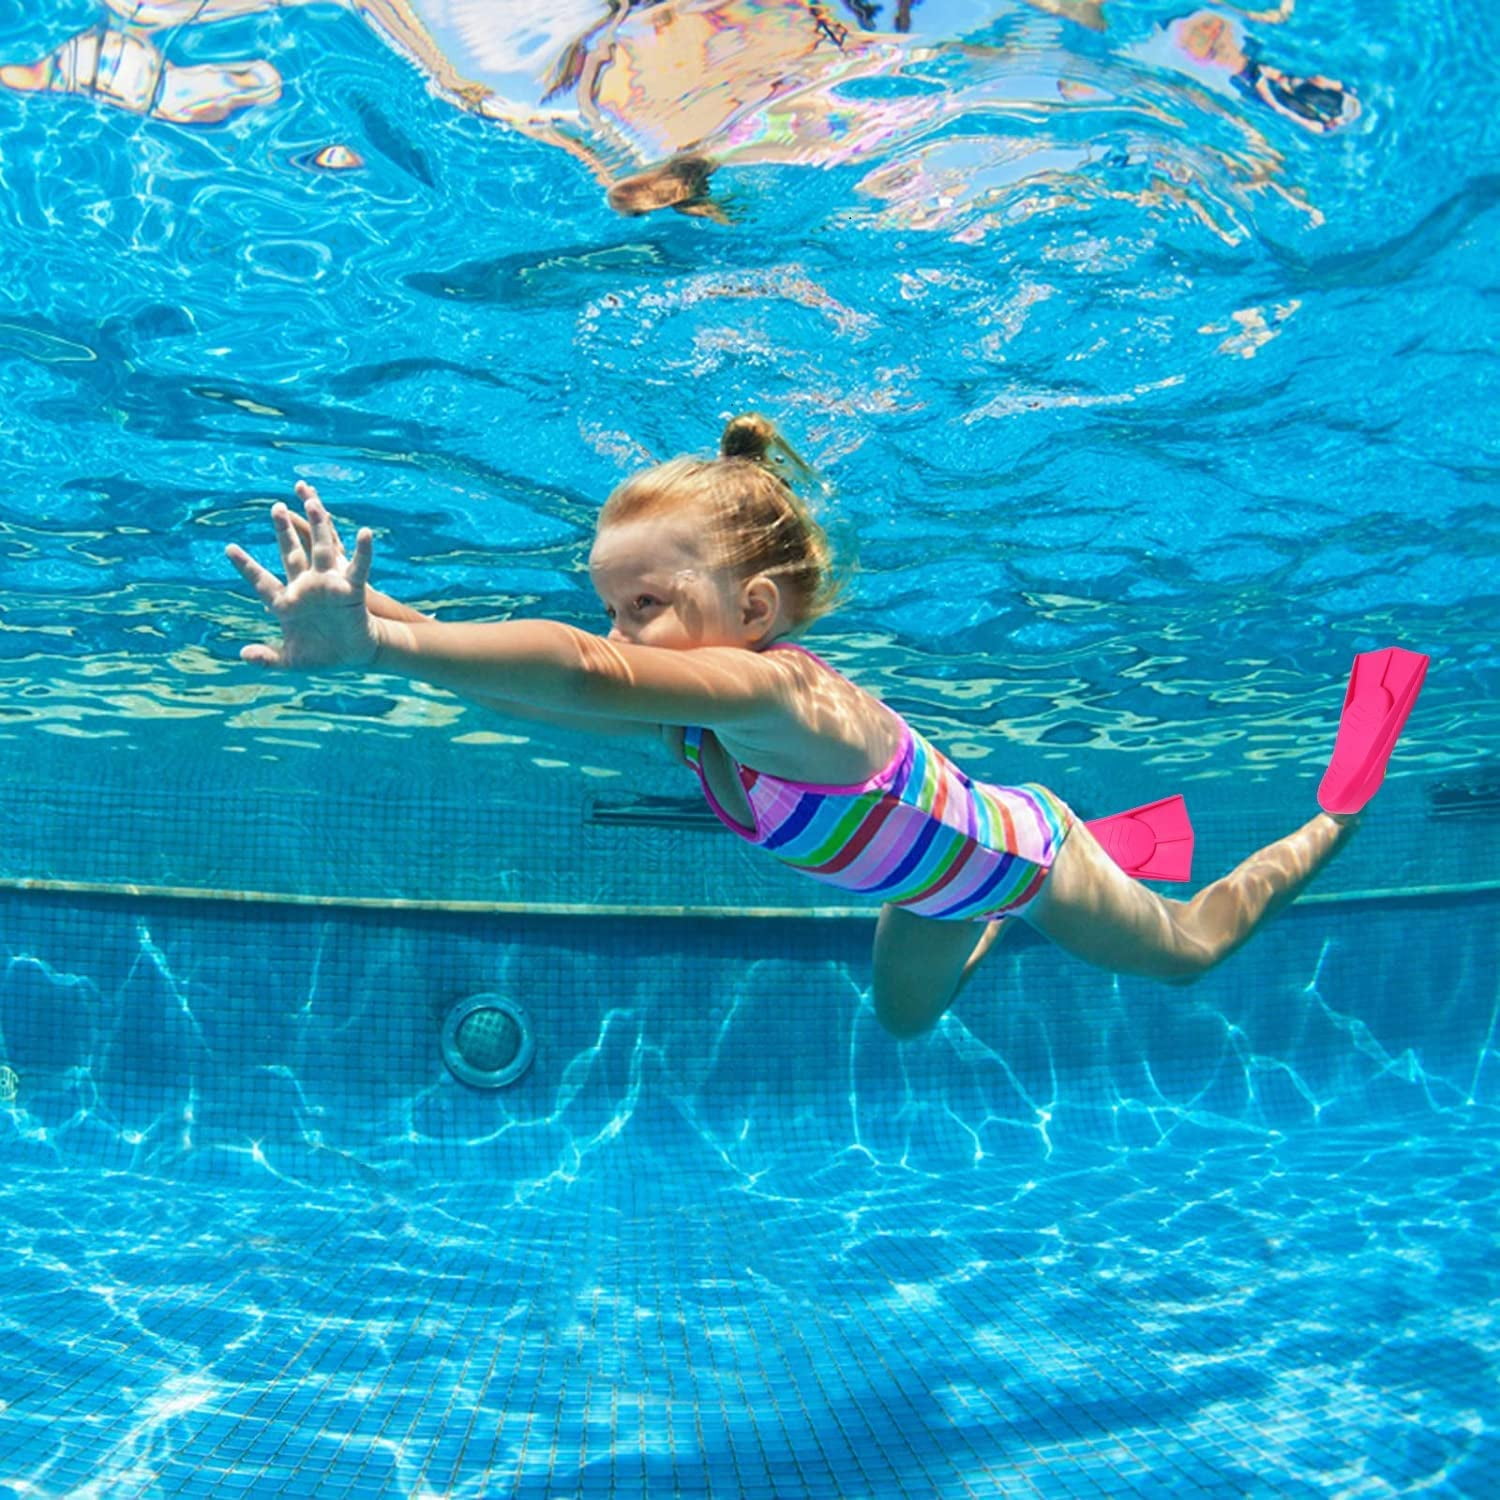 Foyinbet Swim Fins for Lap Swimming Snorkel Training Fins for Adult Men Women Kids 